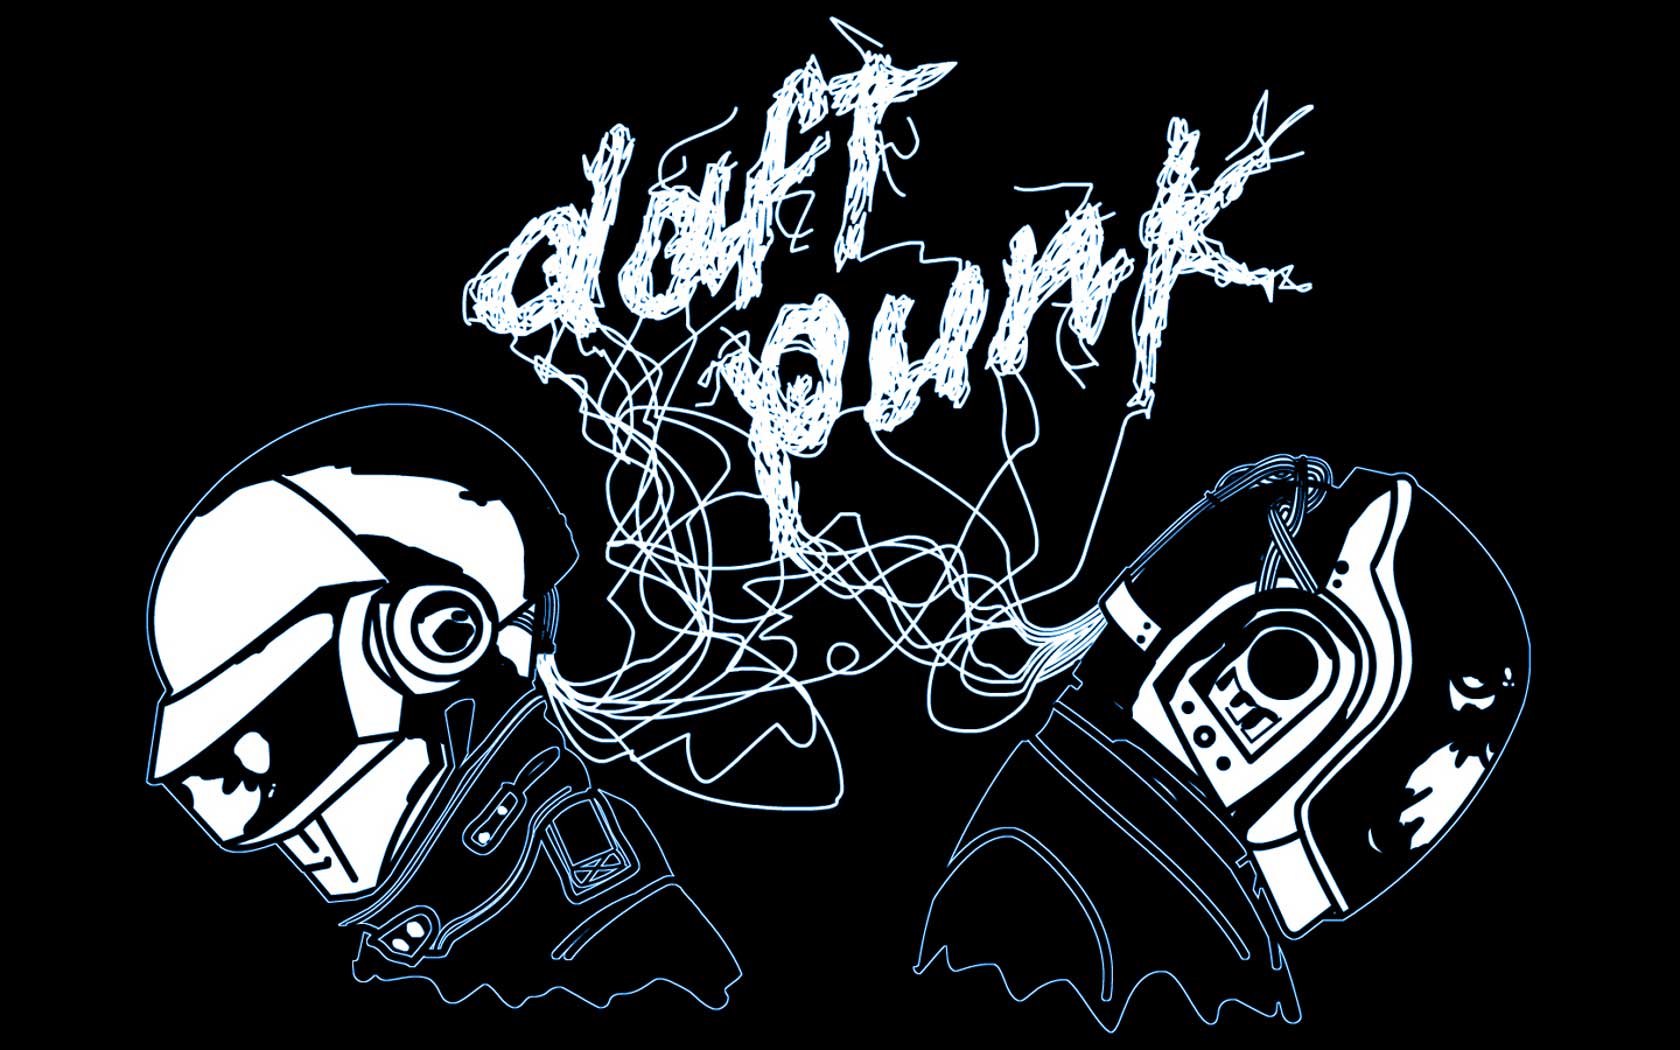 Daft Punk 20912 1440x900 px